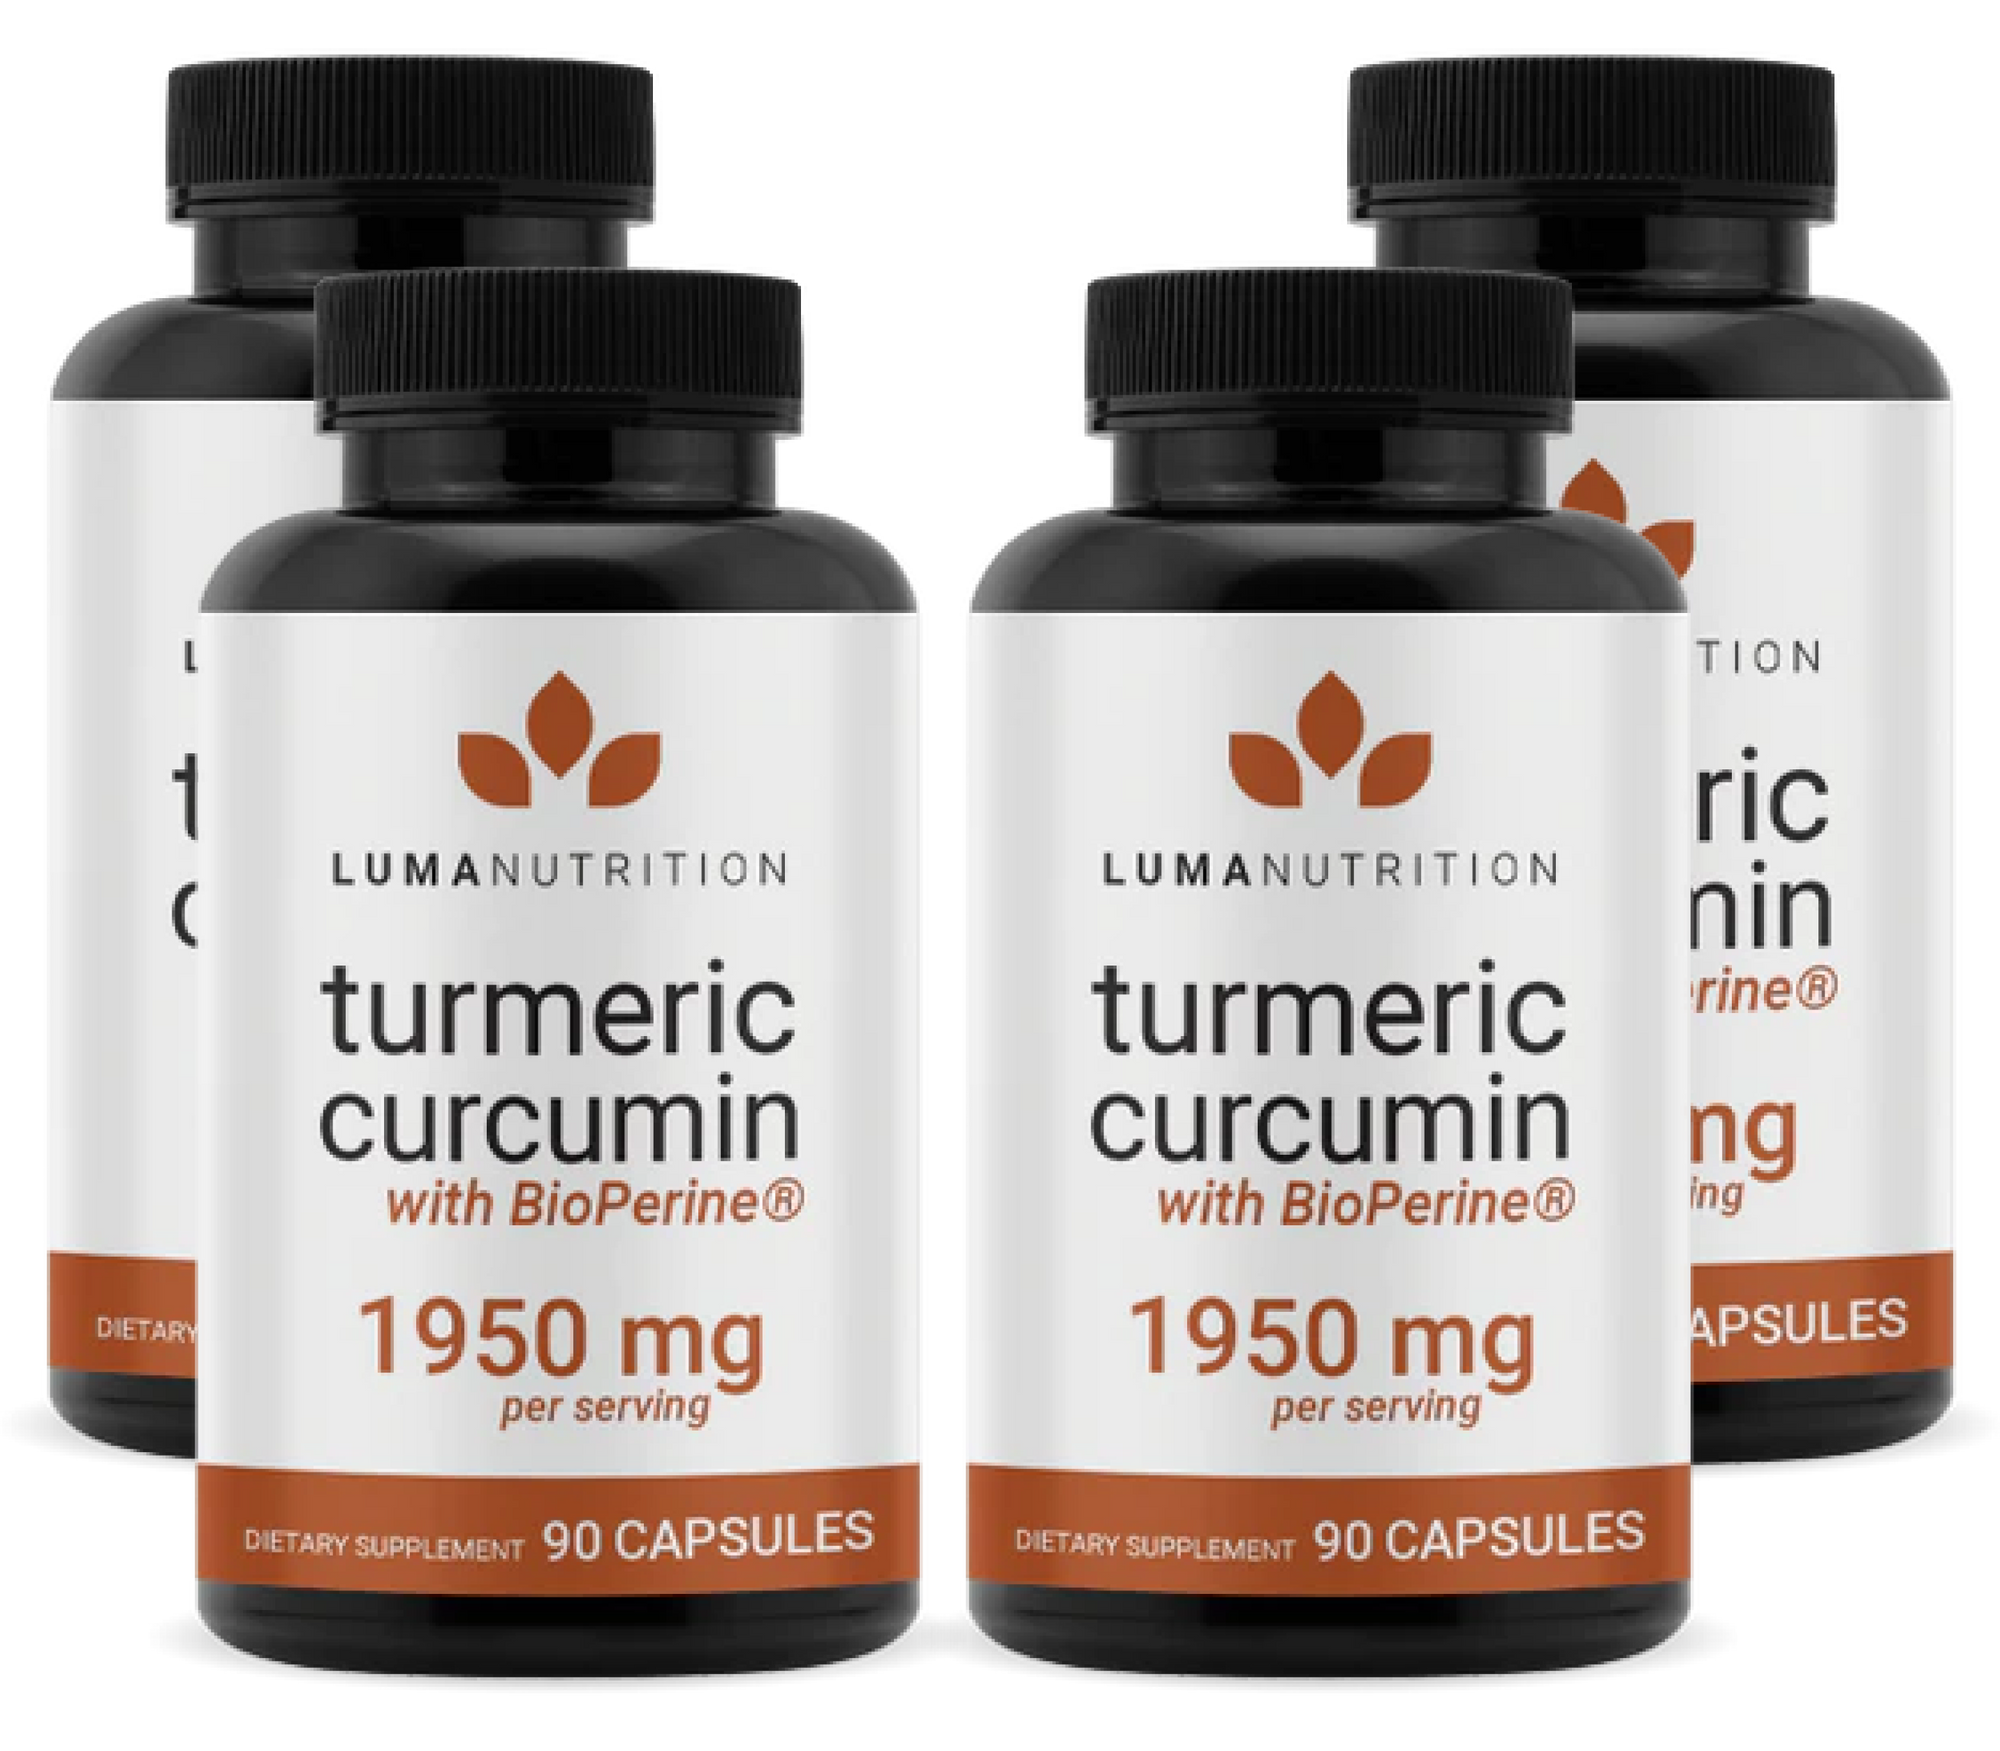 Turmeric Curcumin - 4 Bottle Discount